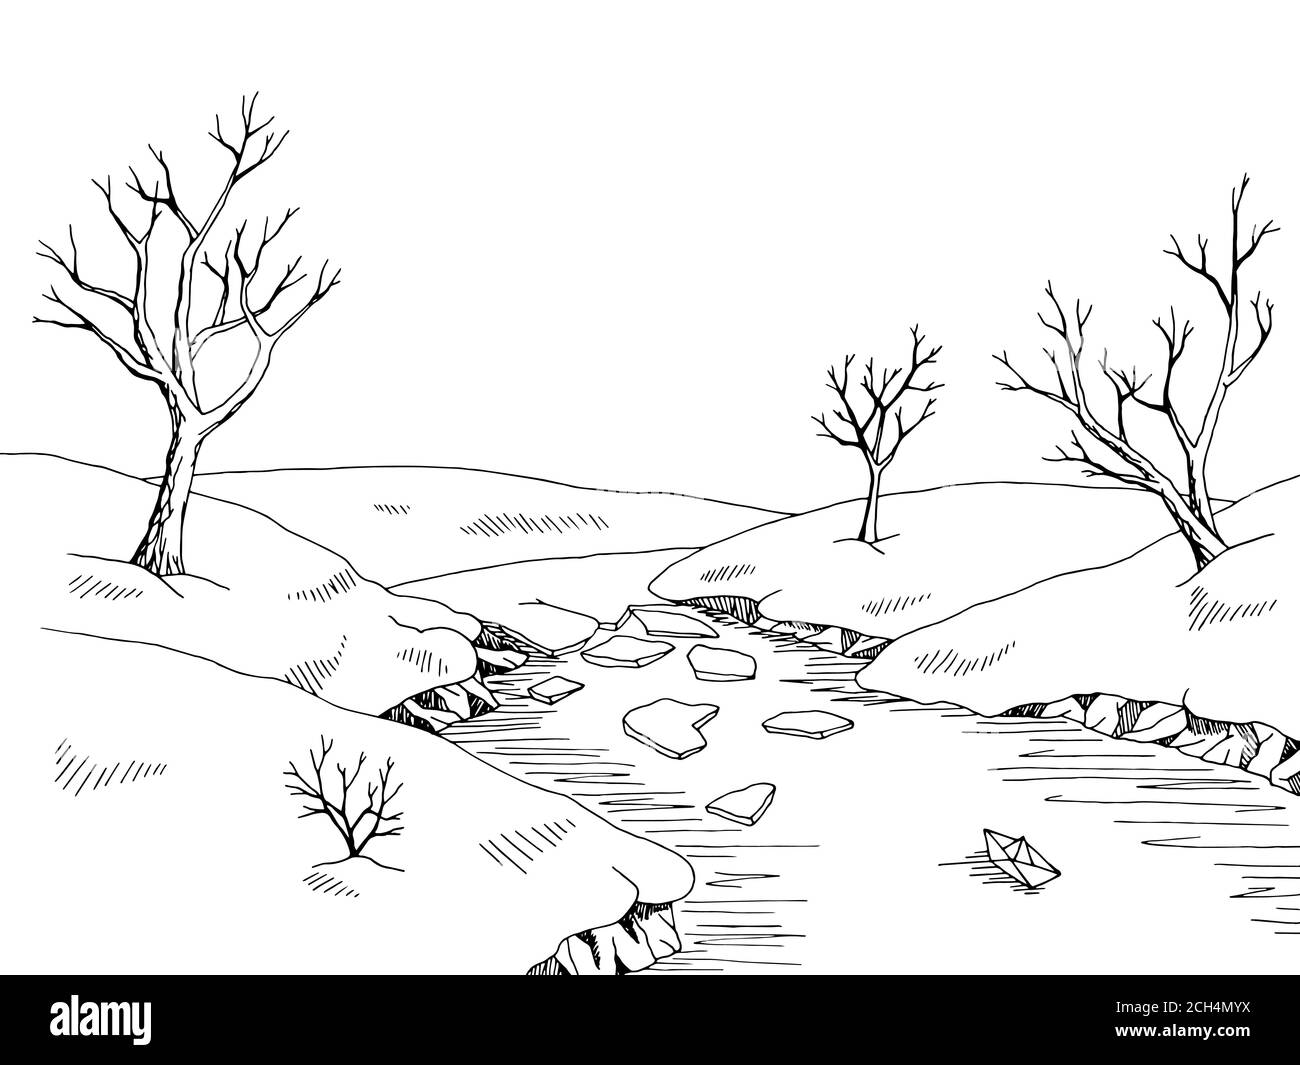 Frühling Fluss Grafik schwarz weiß Landschaft Skizze Illustration Vektor Stock Vektor